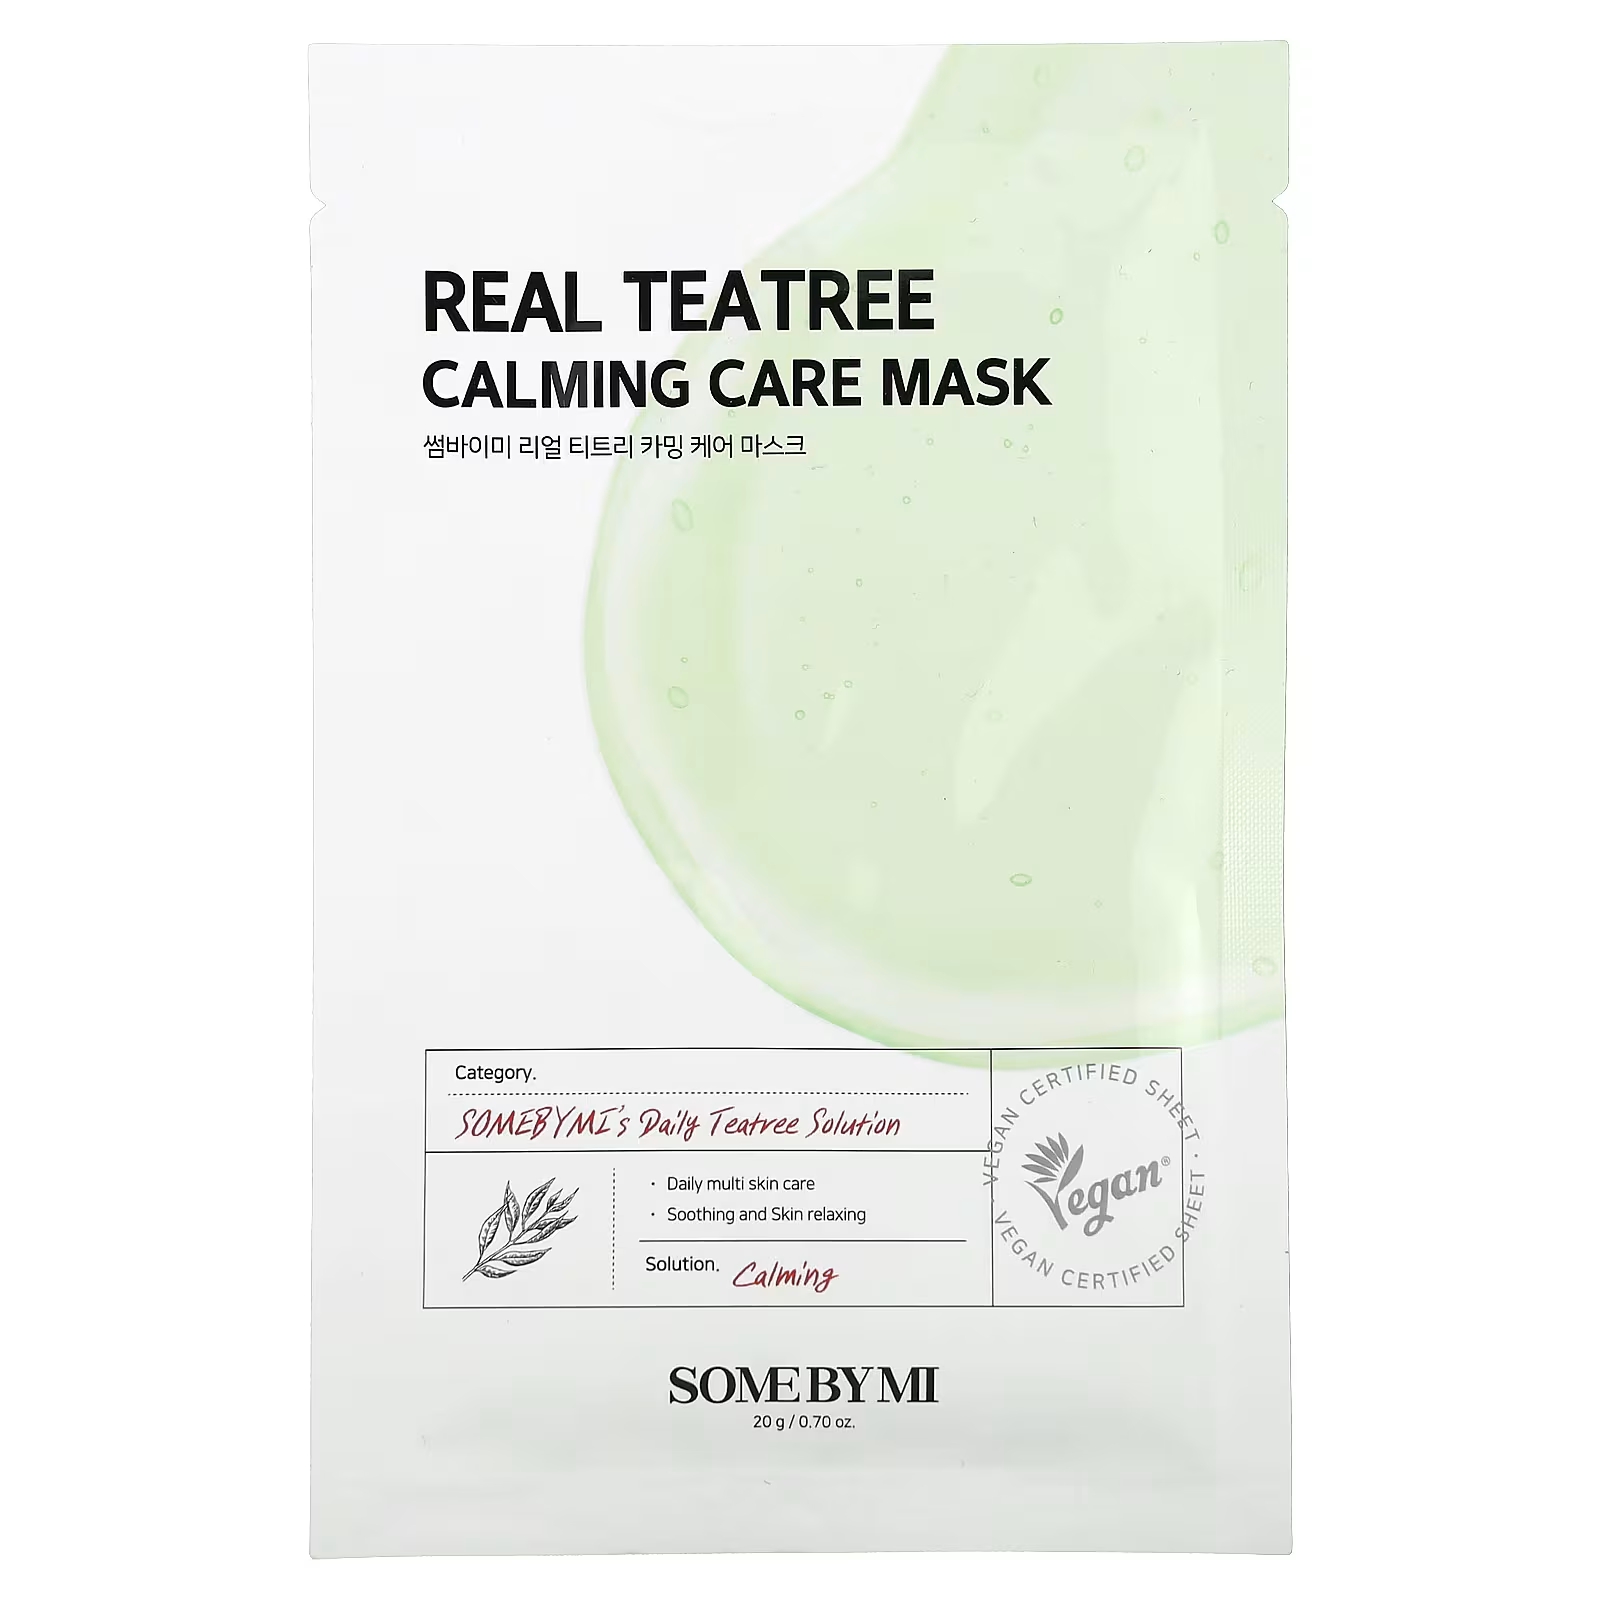 SOME BY MI Real Tea Tree Calming Care Beauty Mask, 1 лист, 0,70 унции (20 г) уход за лицом montagne jeunesse маска spa чайное дерево